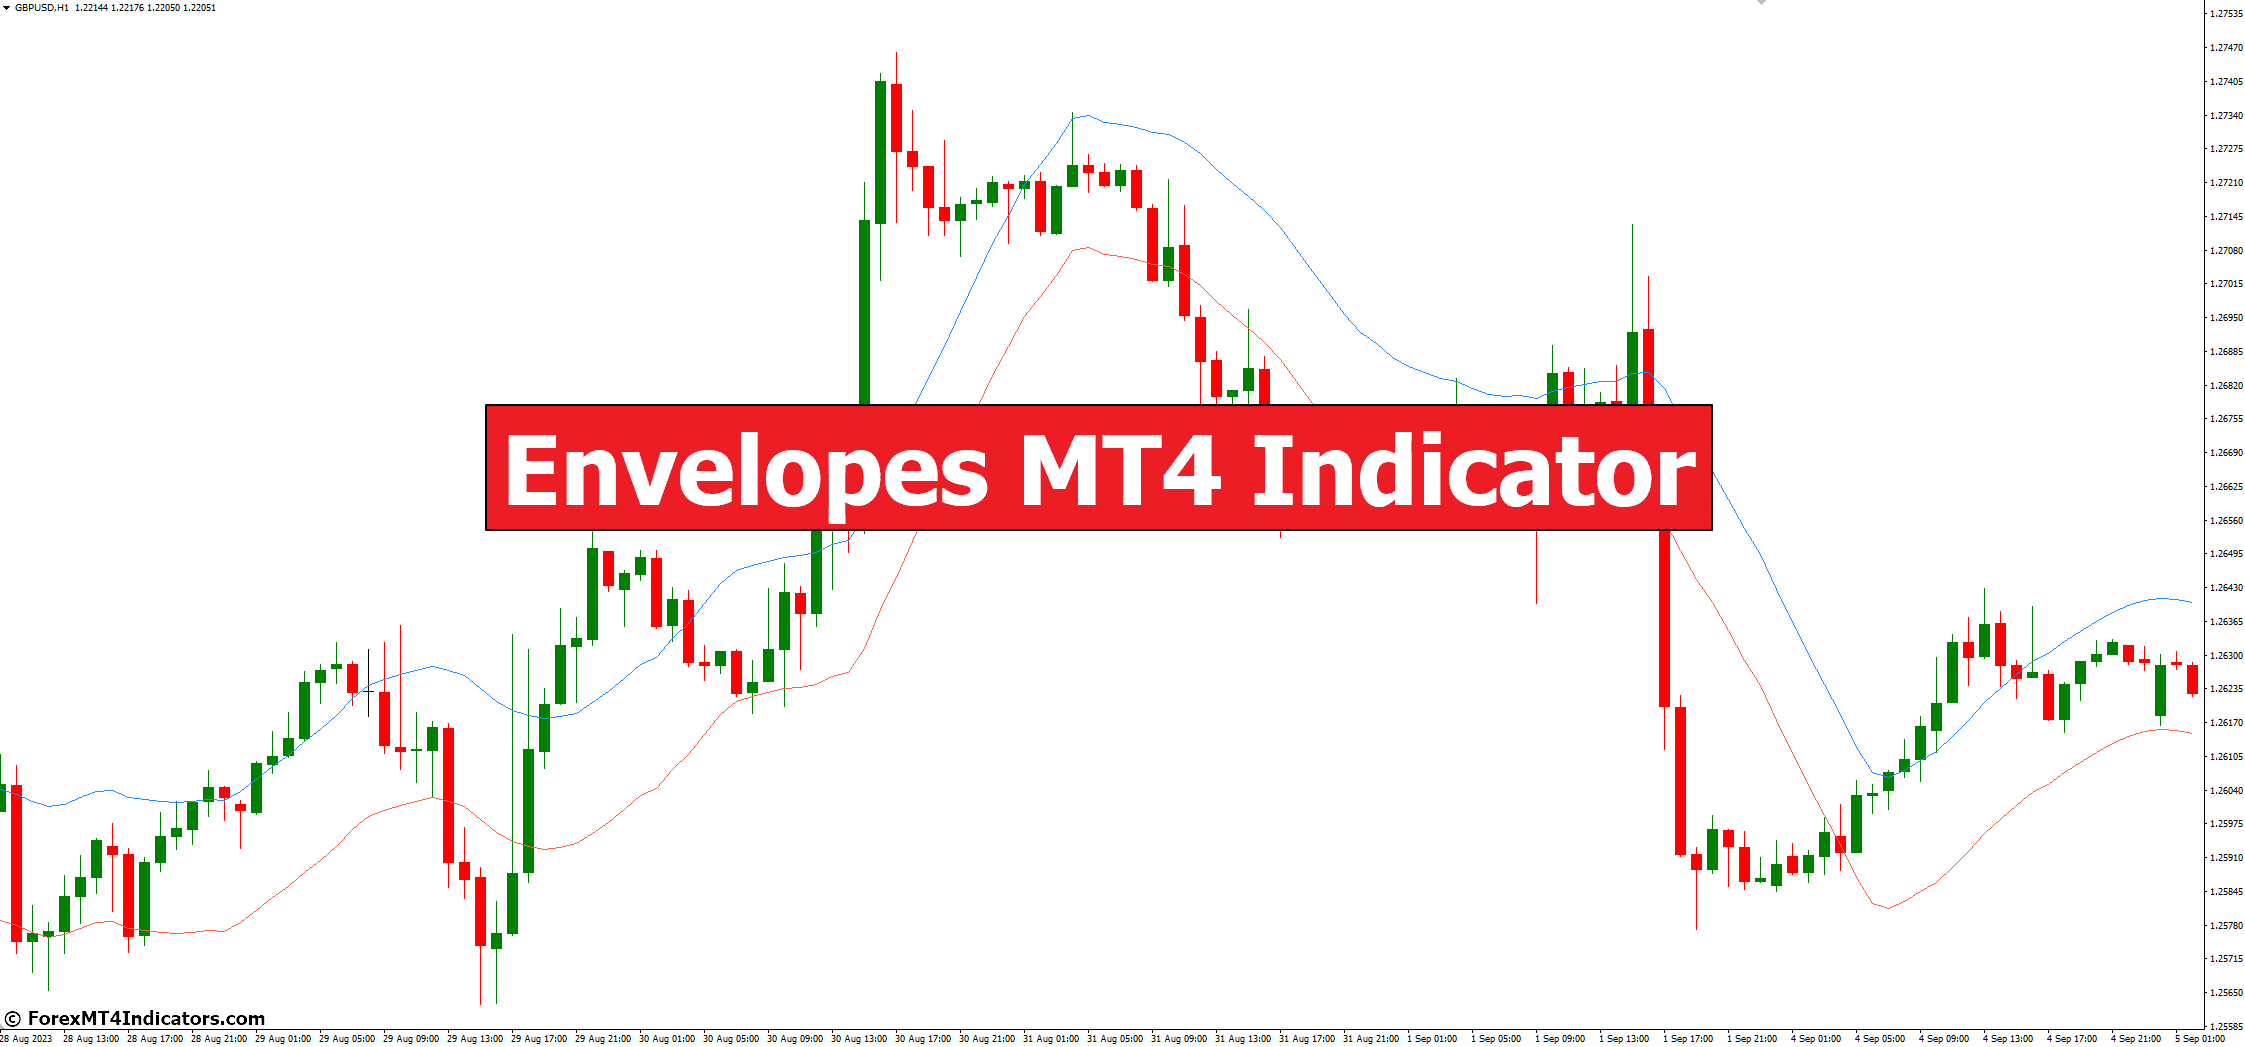 Envelopes MT4 Indicator